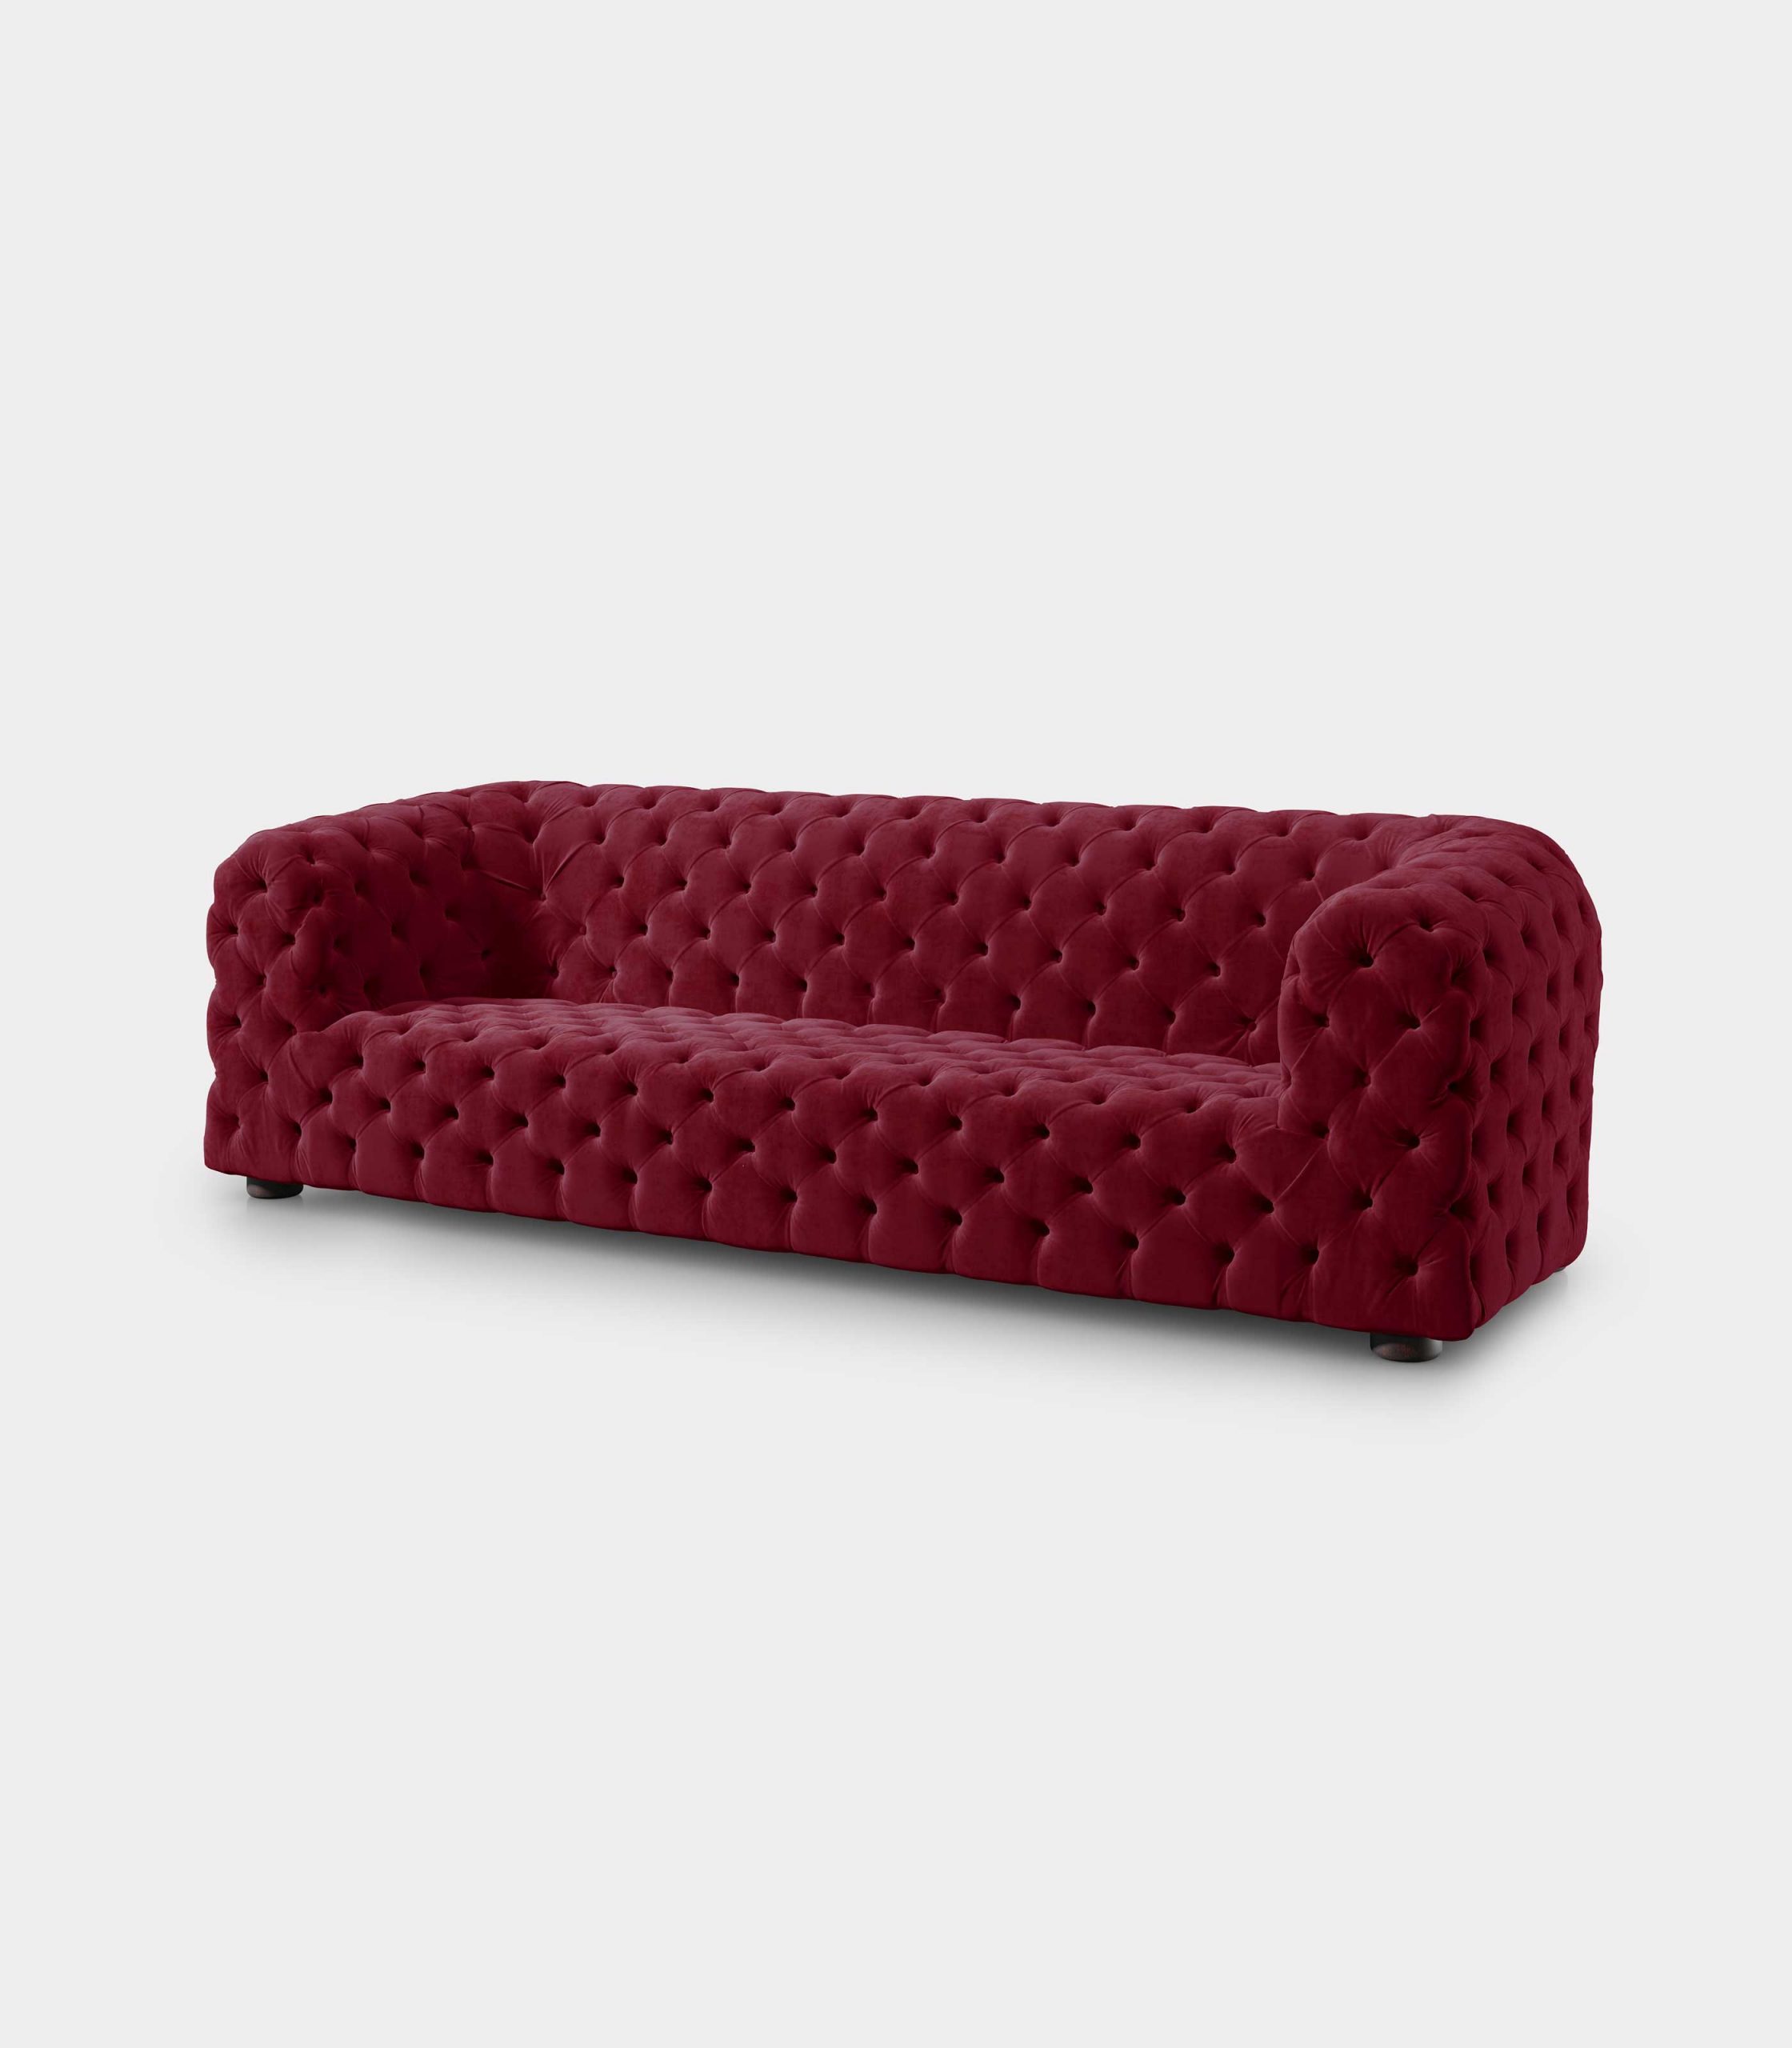 Capitonné red velvet sofa loopo milan design FD